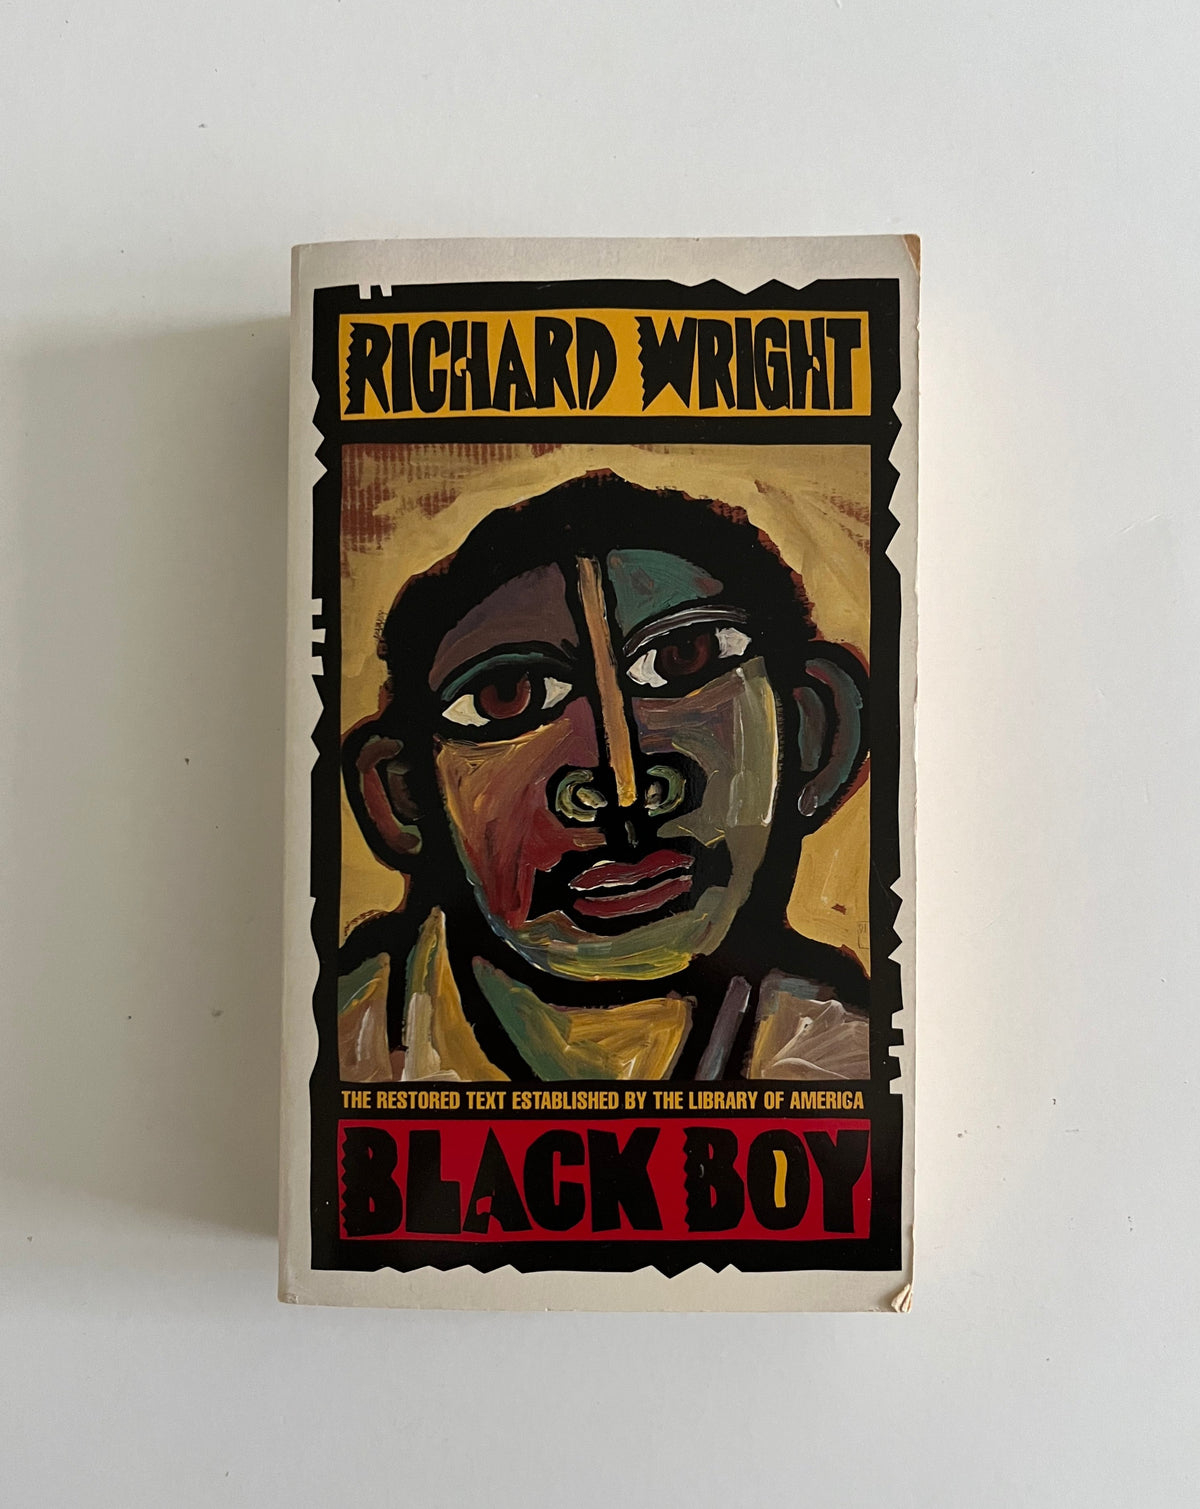 Black Boy by Richard Wright